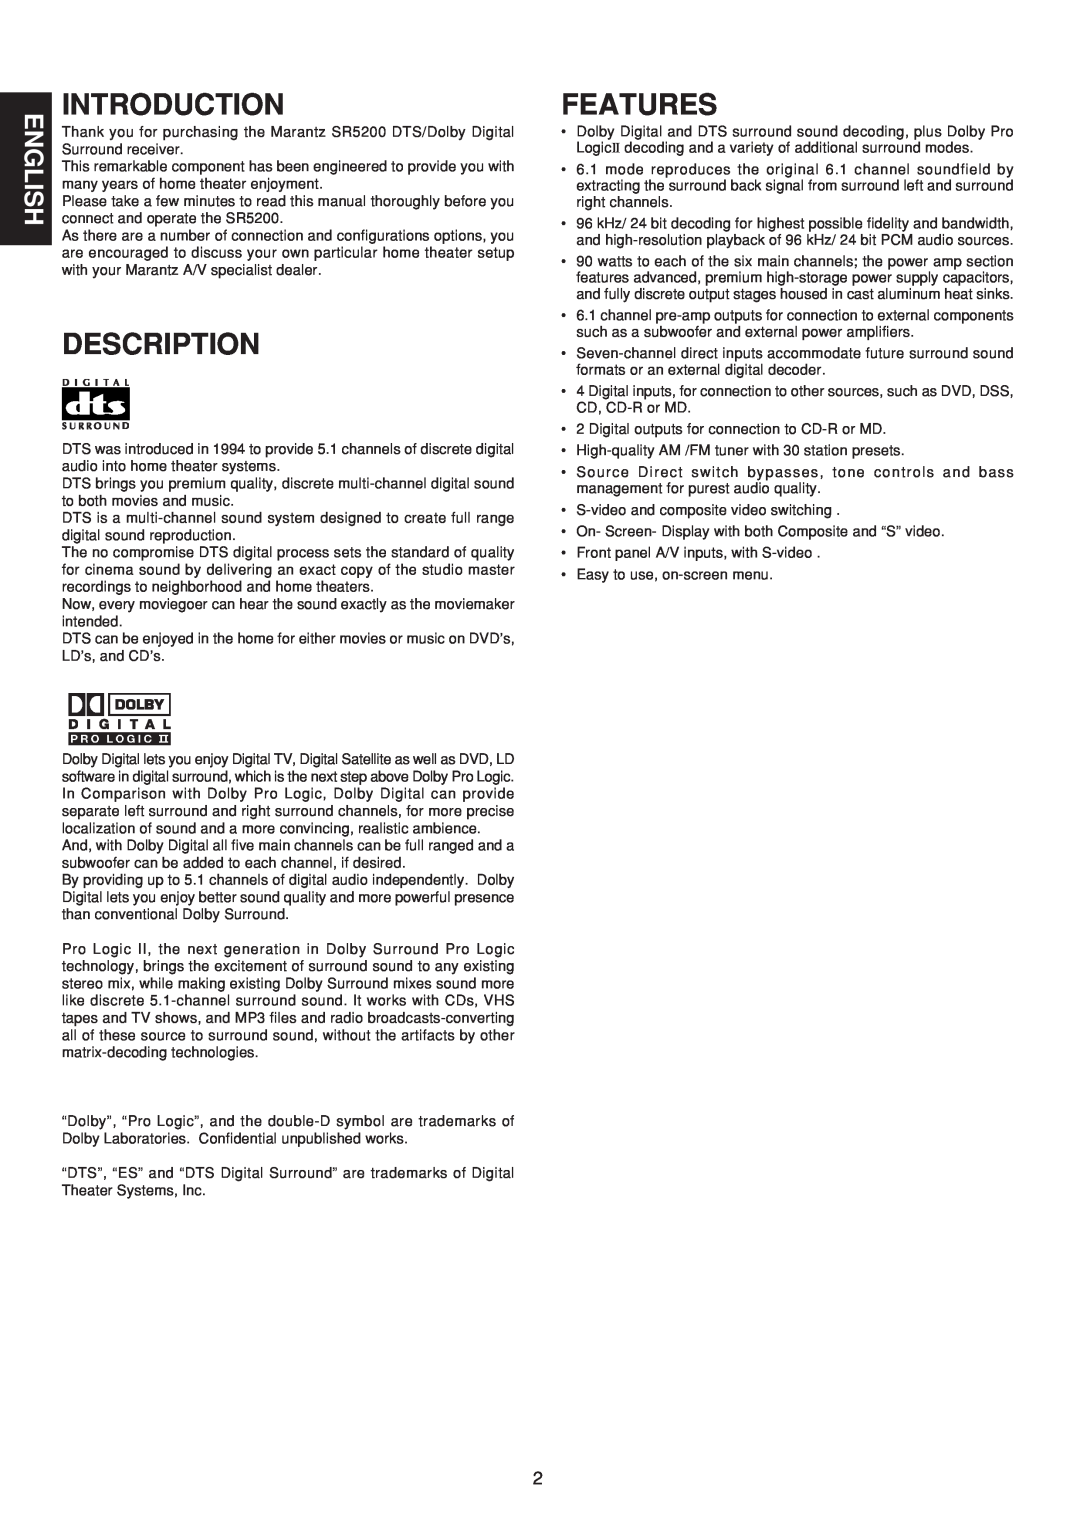 Marantz SR5200 manual Introduction, Description, Features 